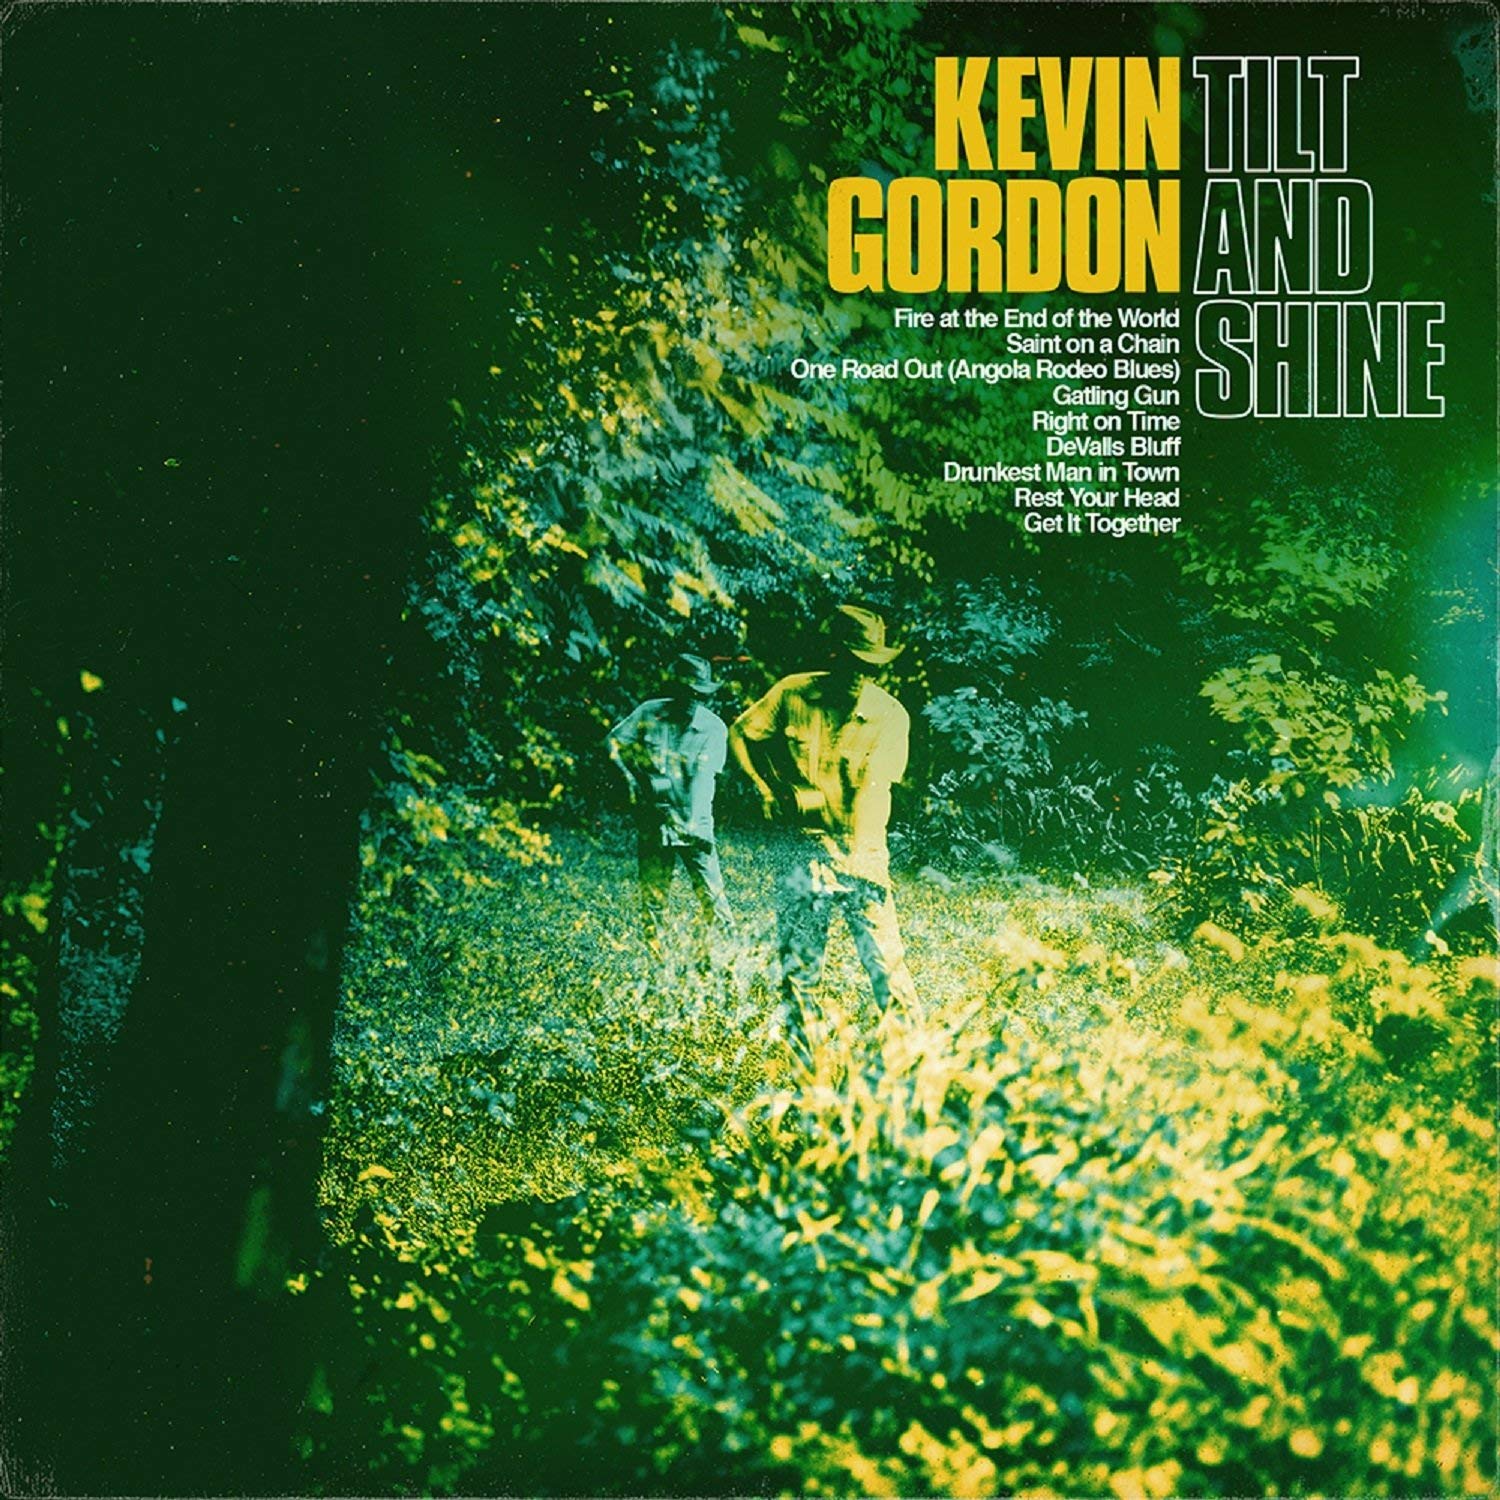 KEVIN GORDON – Tilt and Shine